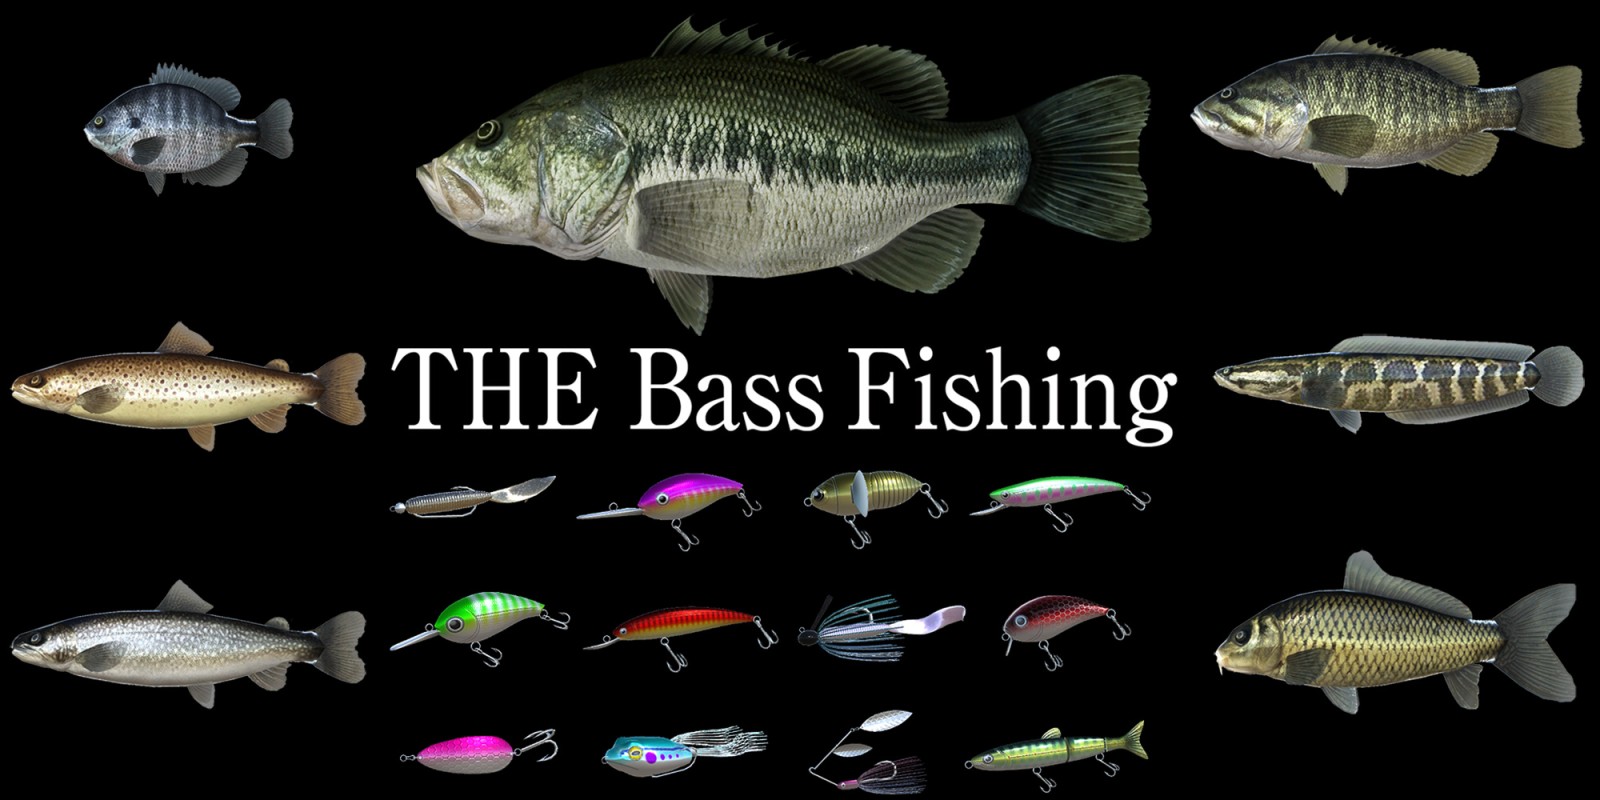 Big Catch Bass Fishing with Fishing Rod Bundle (Wii)